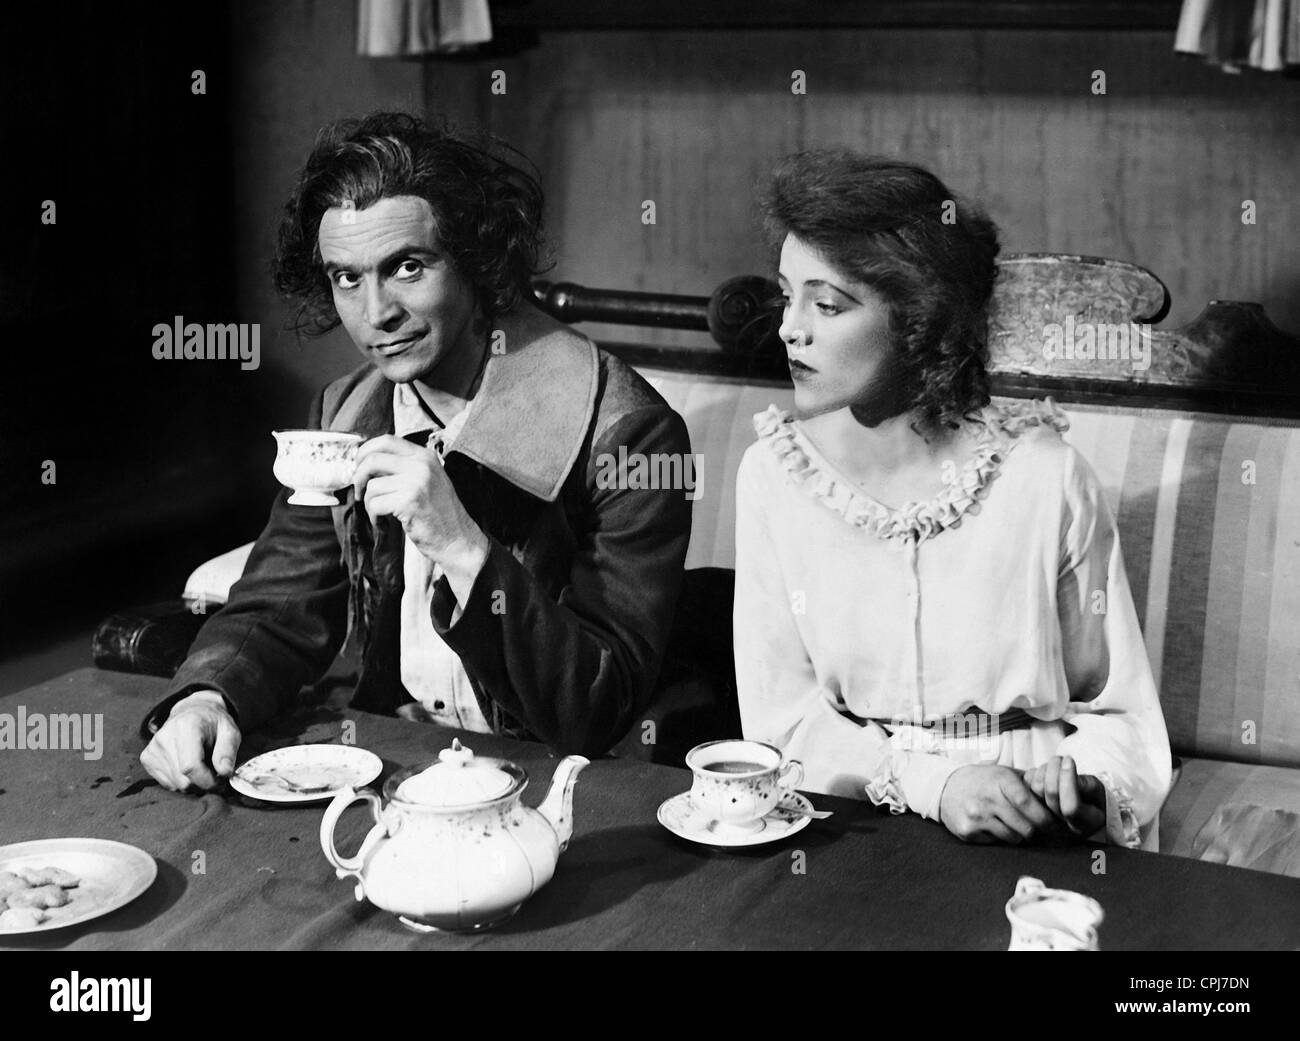 Ernst Deutsch e Karin Evans in "Devil's discepolo", 1930 Foto Stock